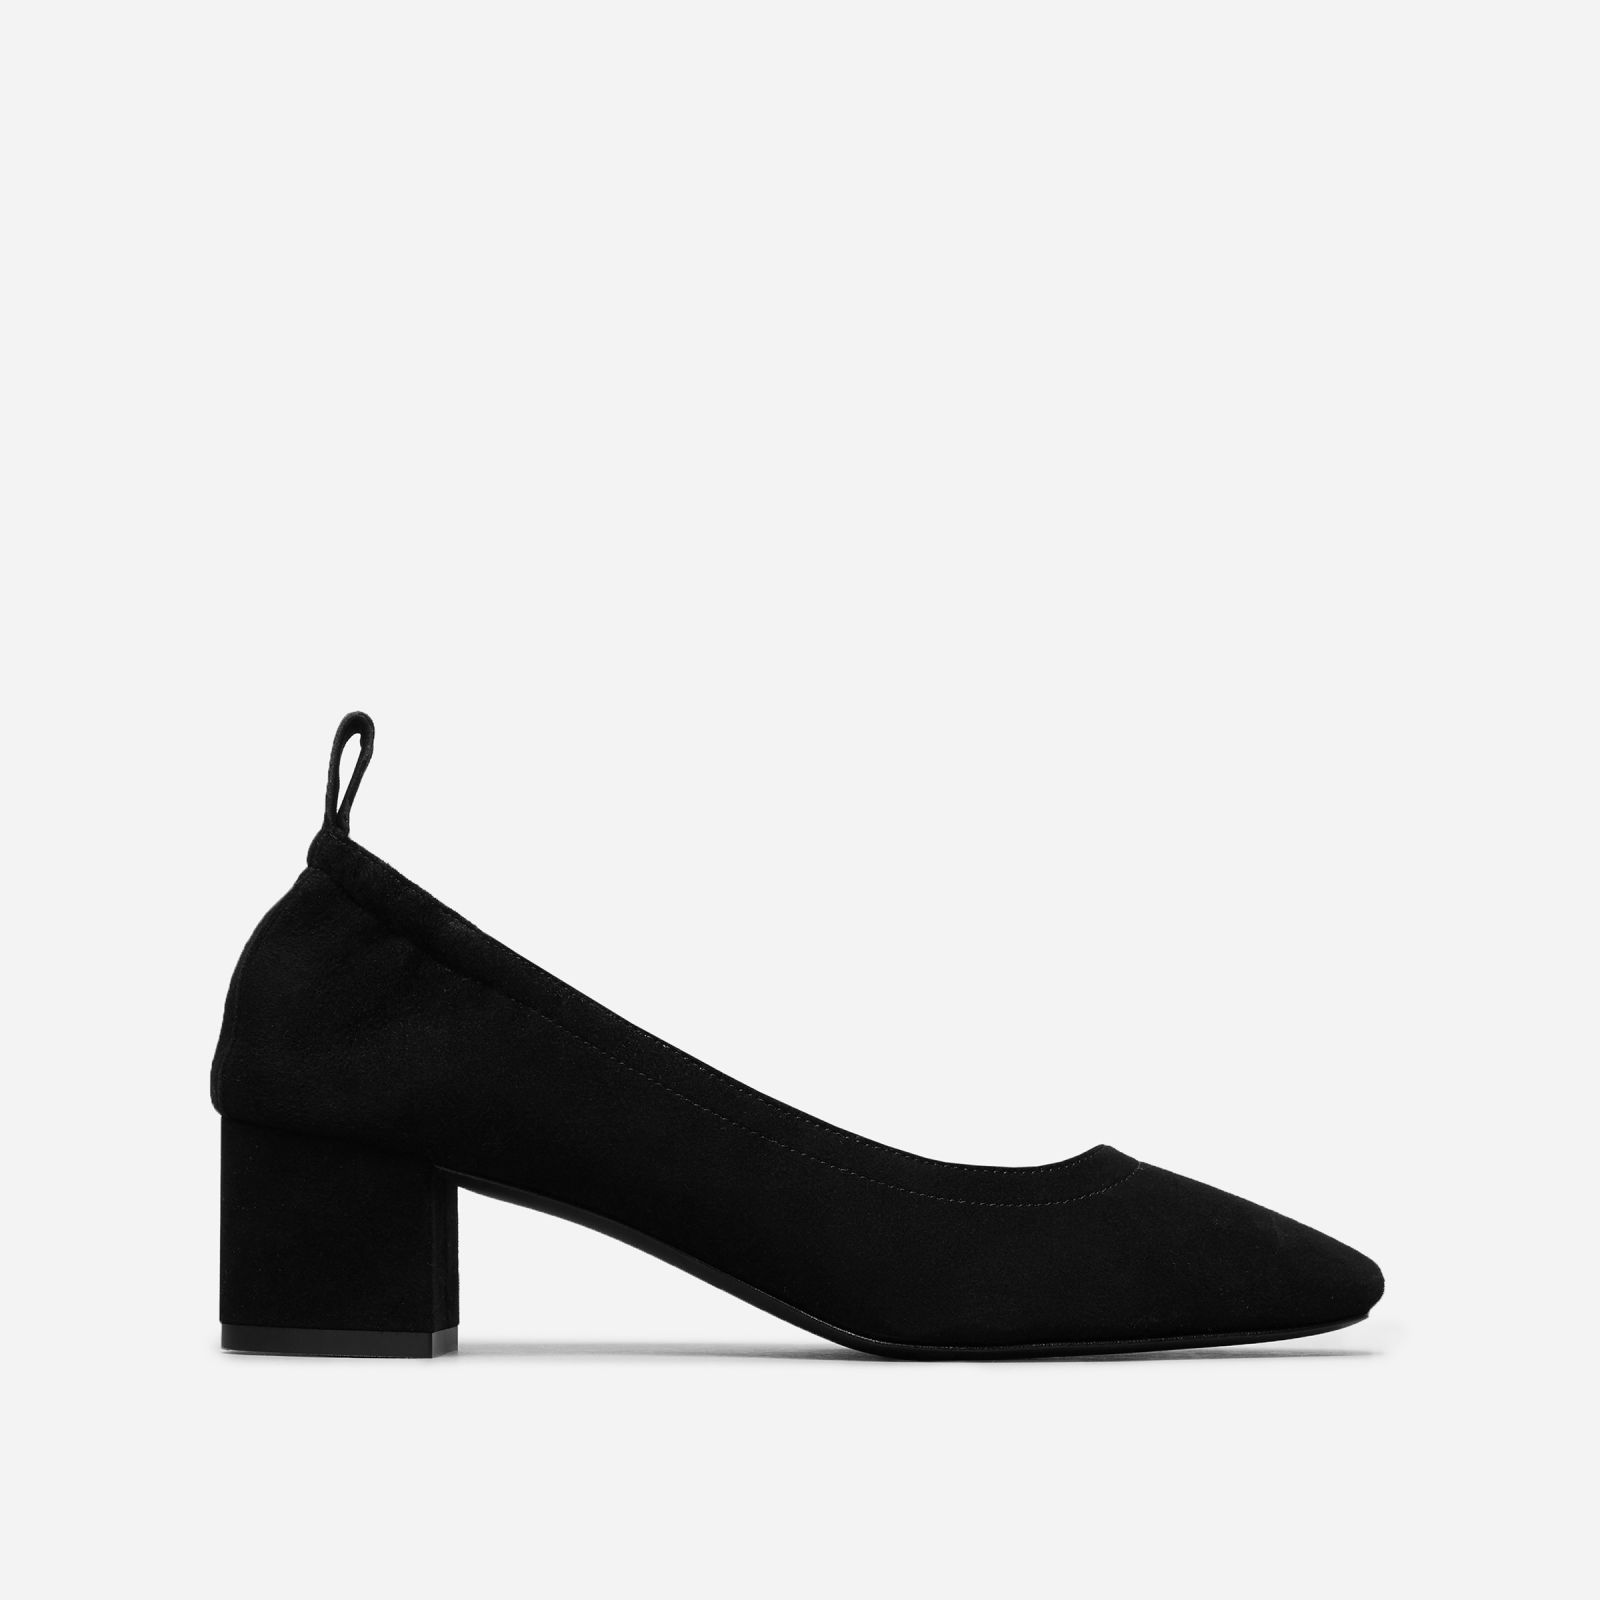 Women's Leather Block Heel Pump by Everlane in Black Suede, Size 5 | Everlane